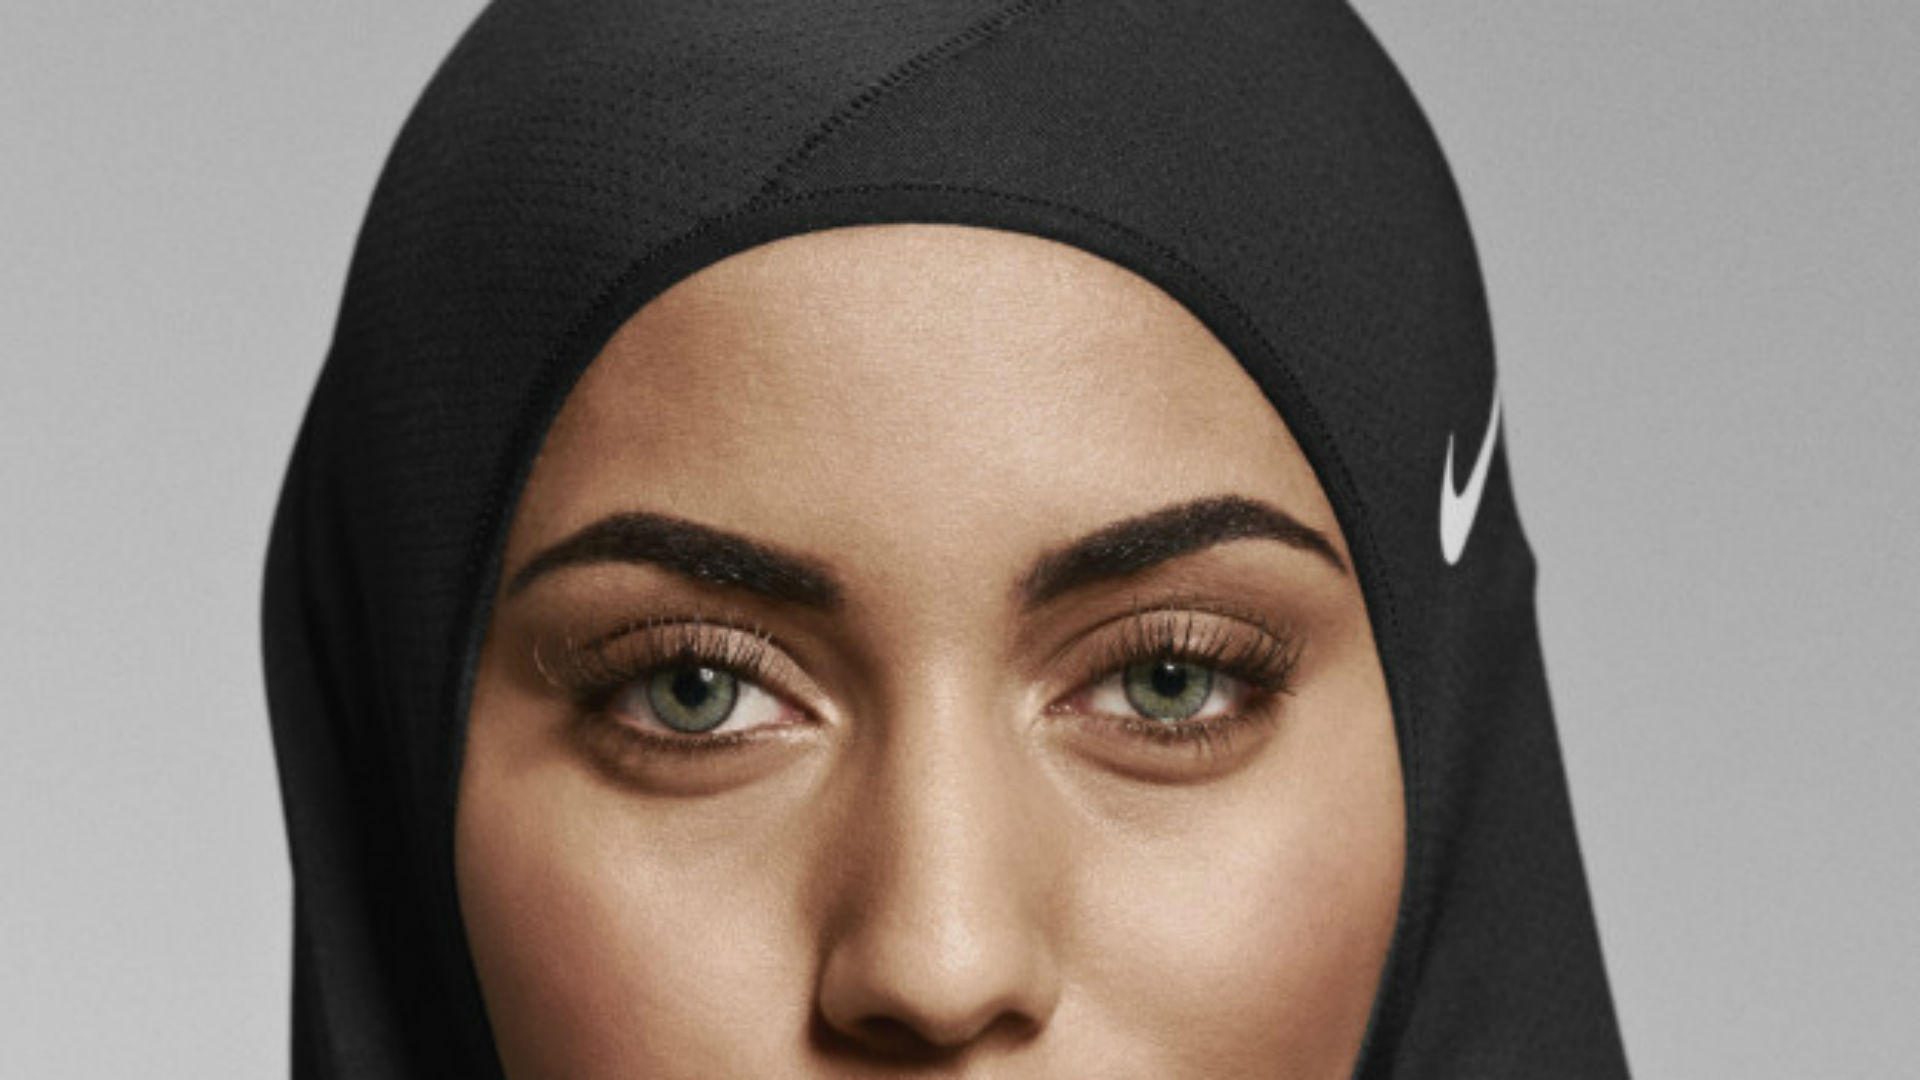 unveils high-performance hijab range for Muslim athletes